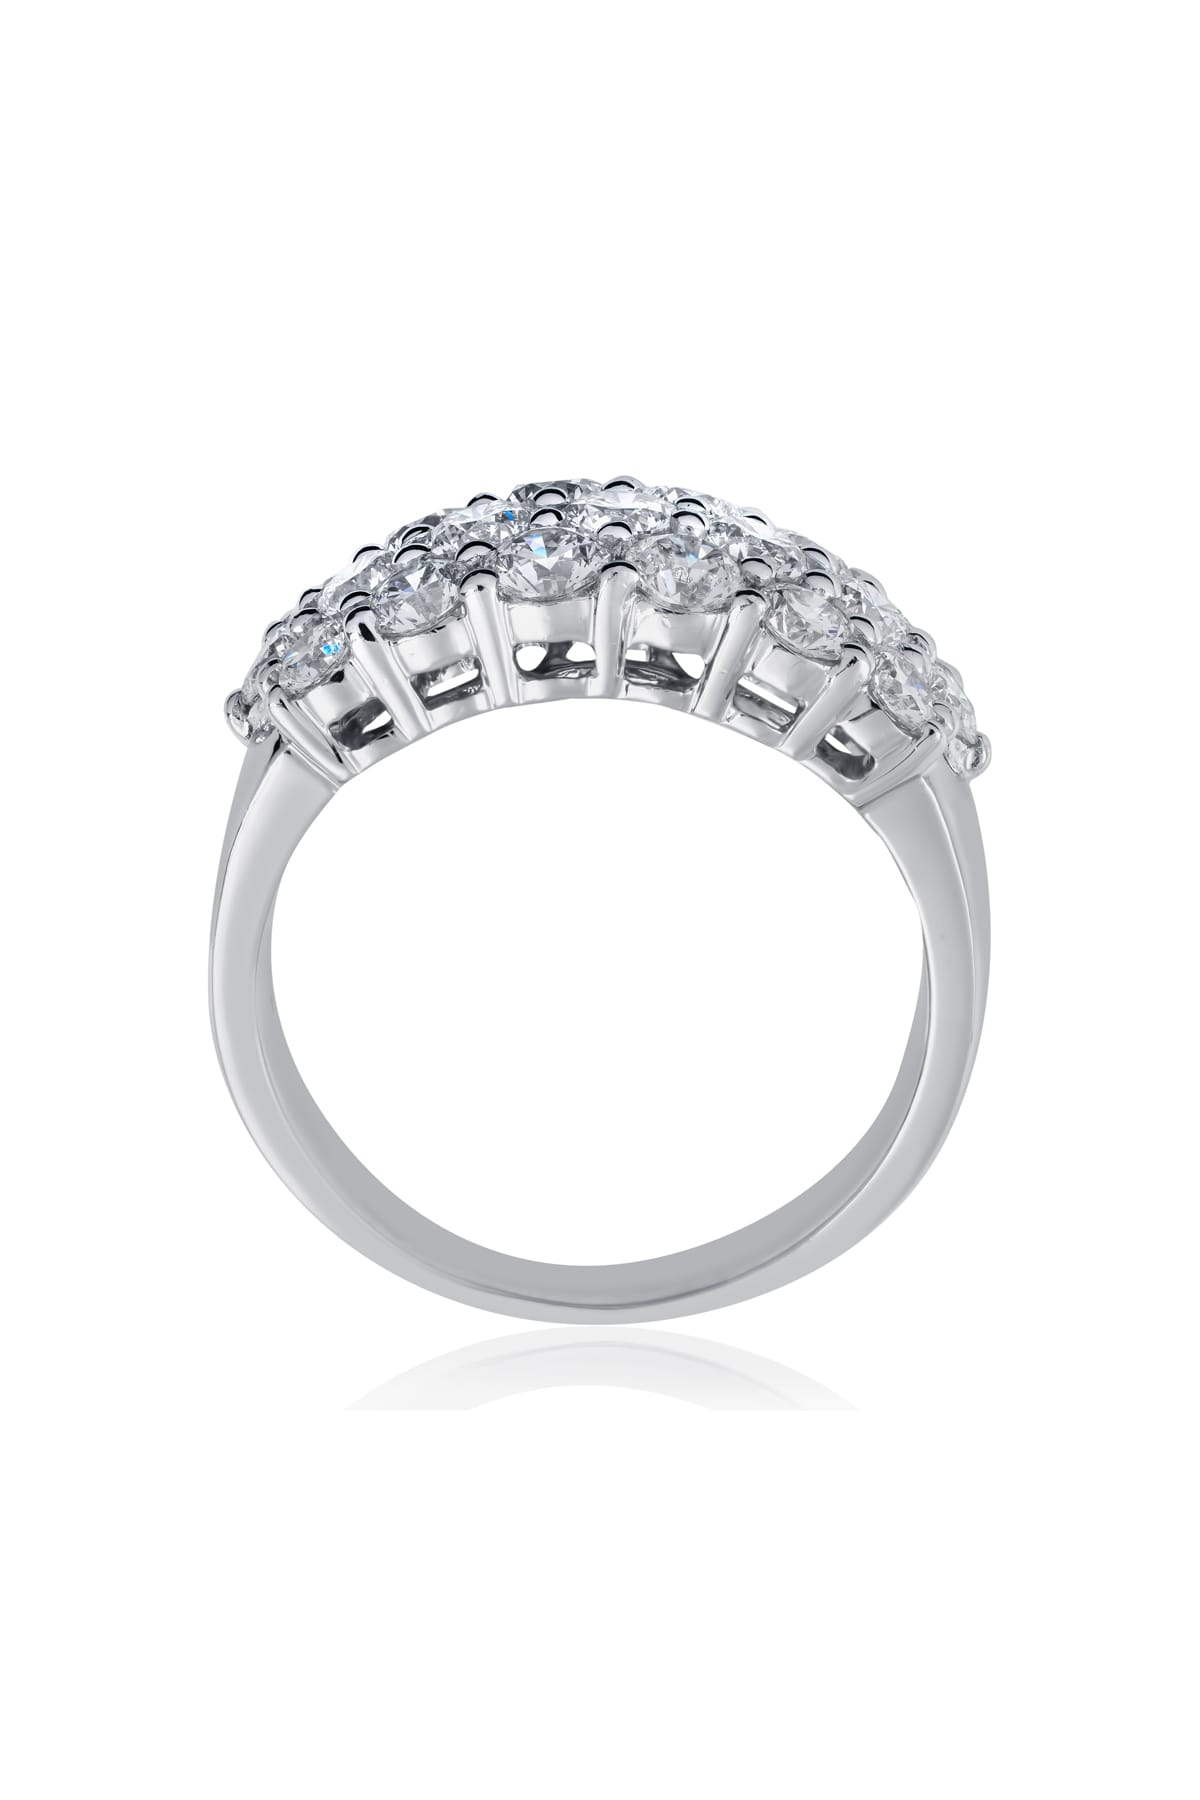 Three Row Wide 2.84ct Diamond Ring set in 18ct White Gold available at LeGassick Diamonds & Jewellery Gold Coast Australia.